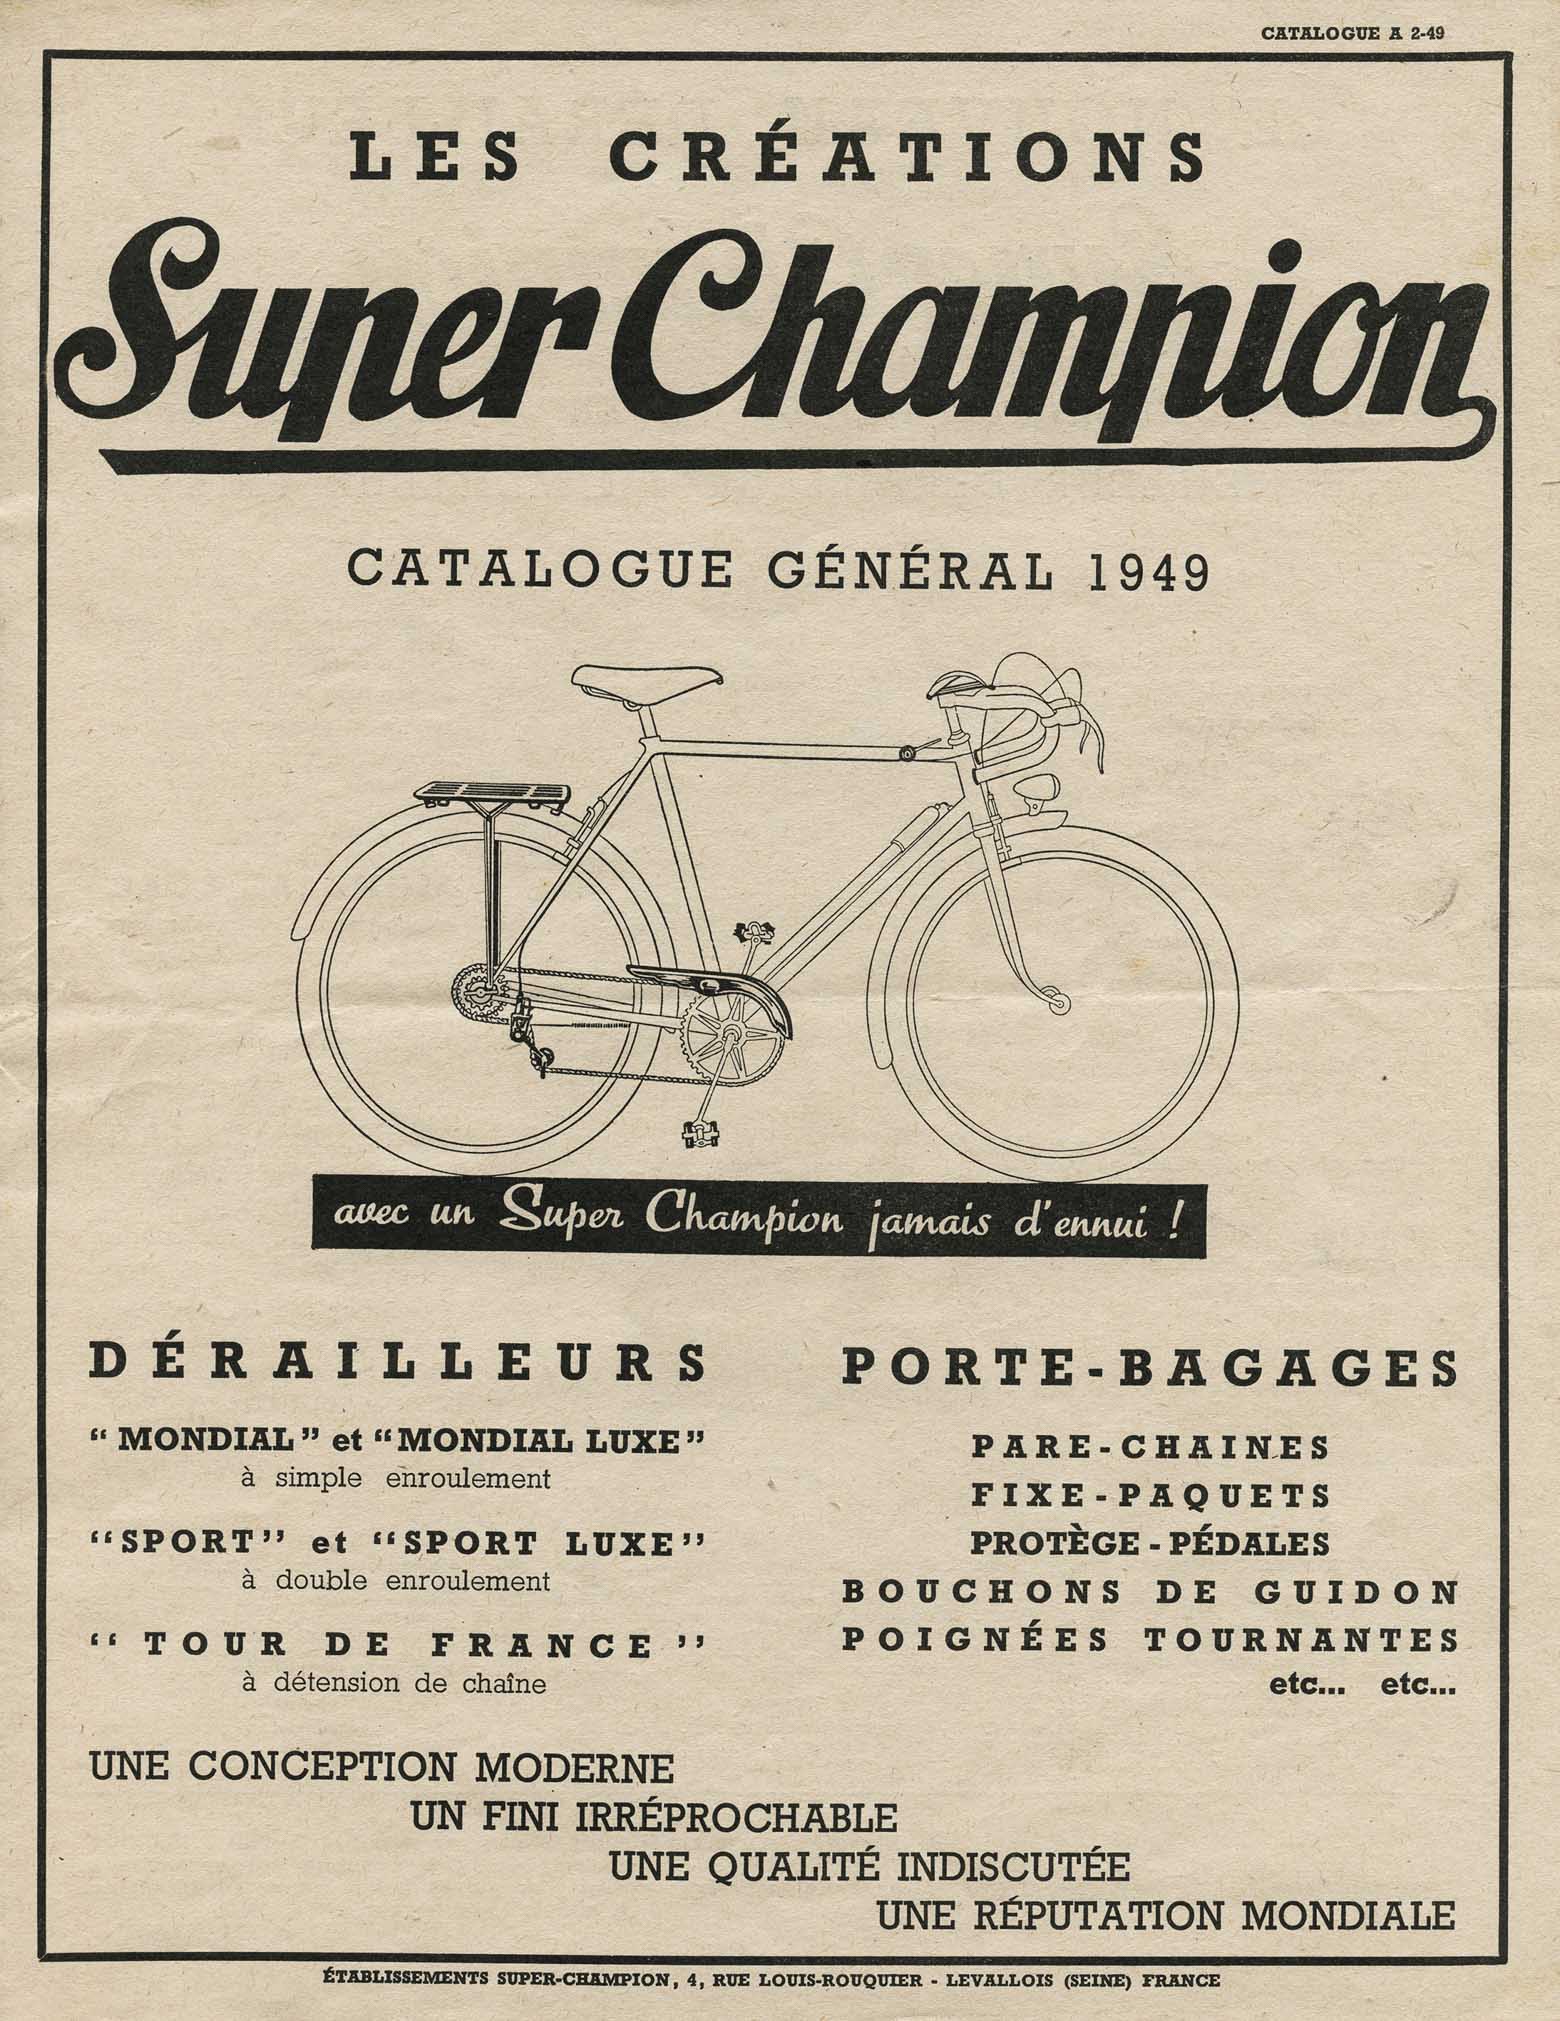 Les Creations Super Champion - Catalogue General 1949 scan 1 main image